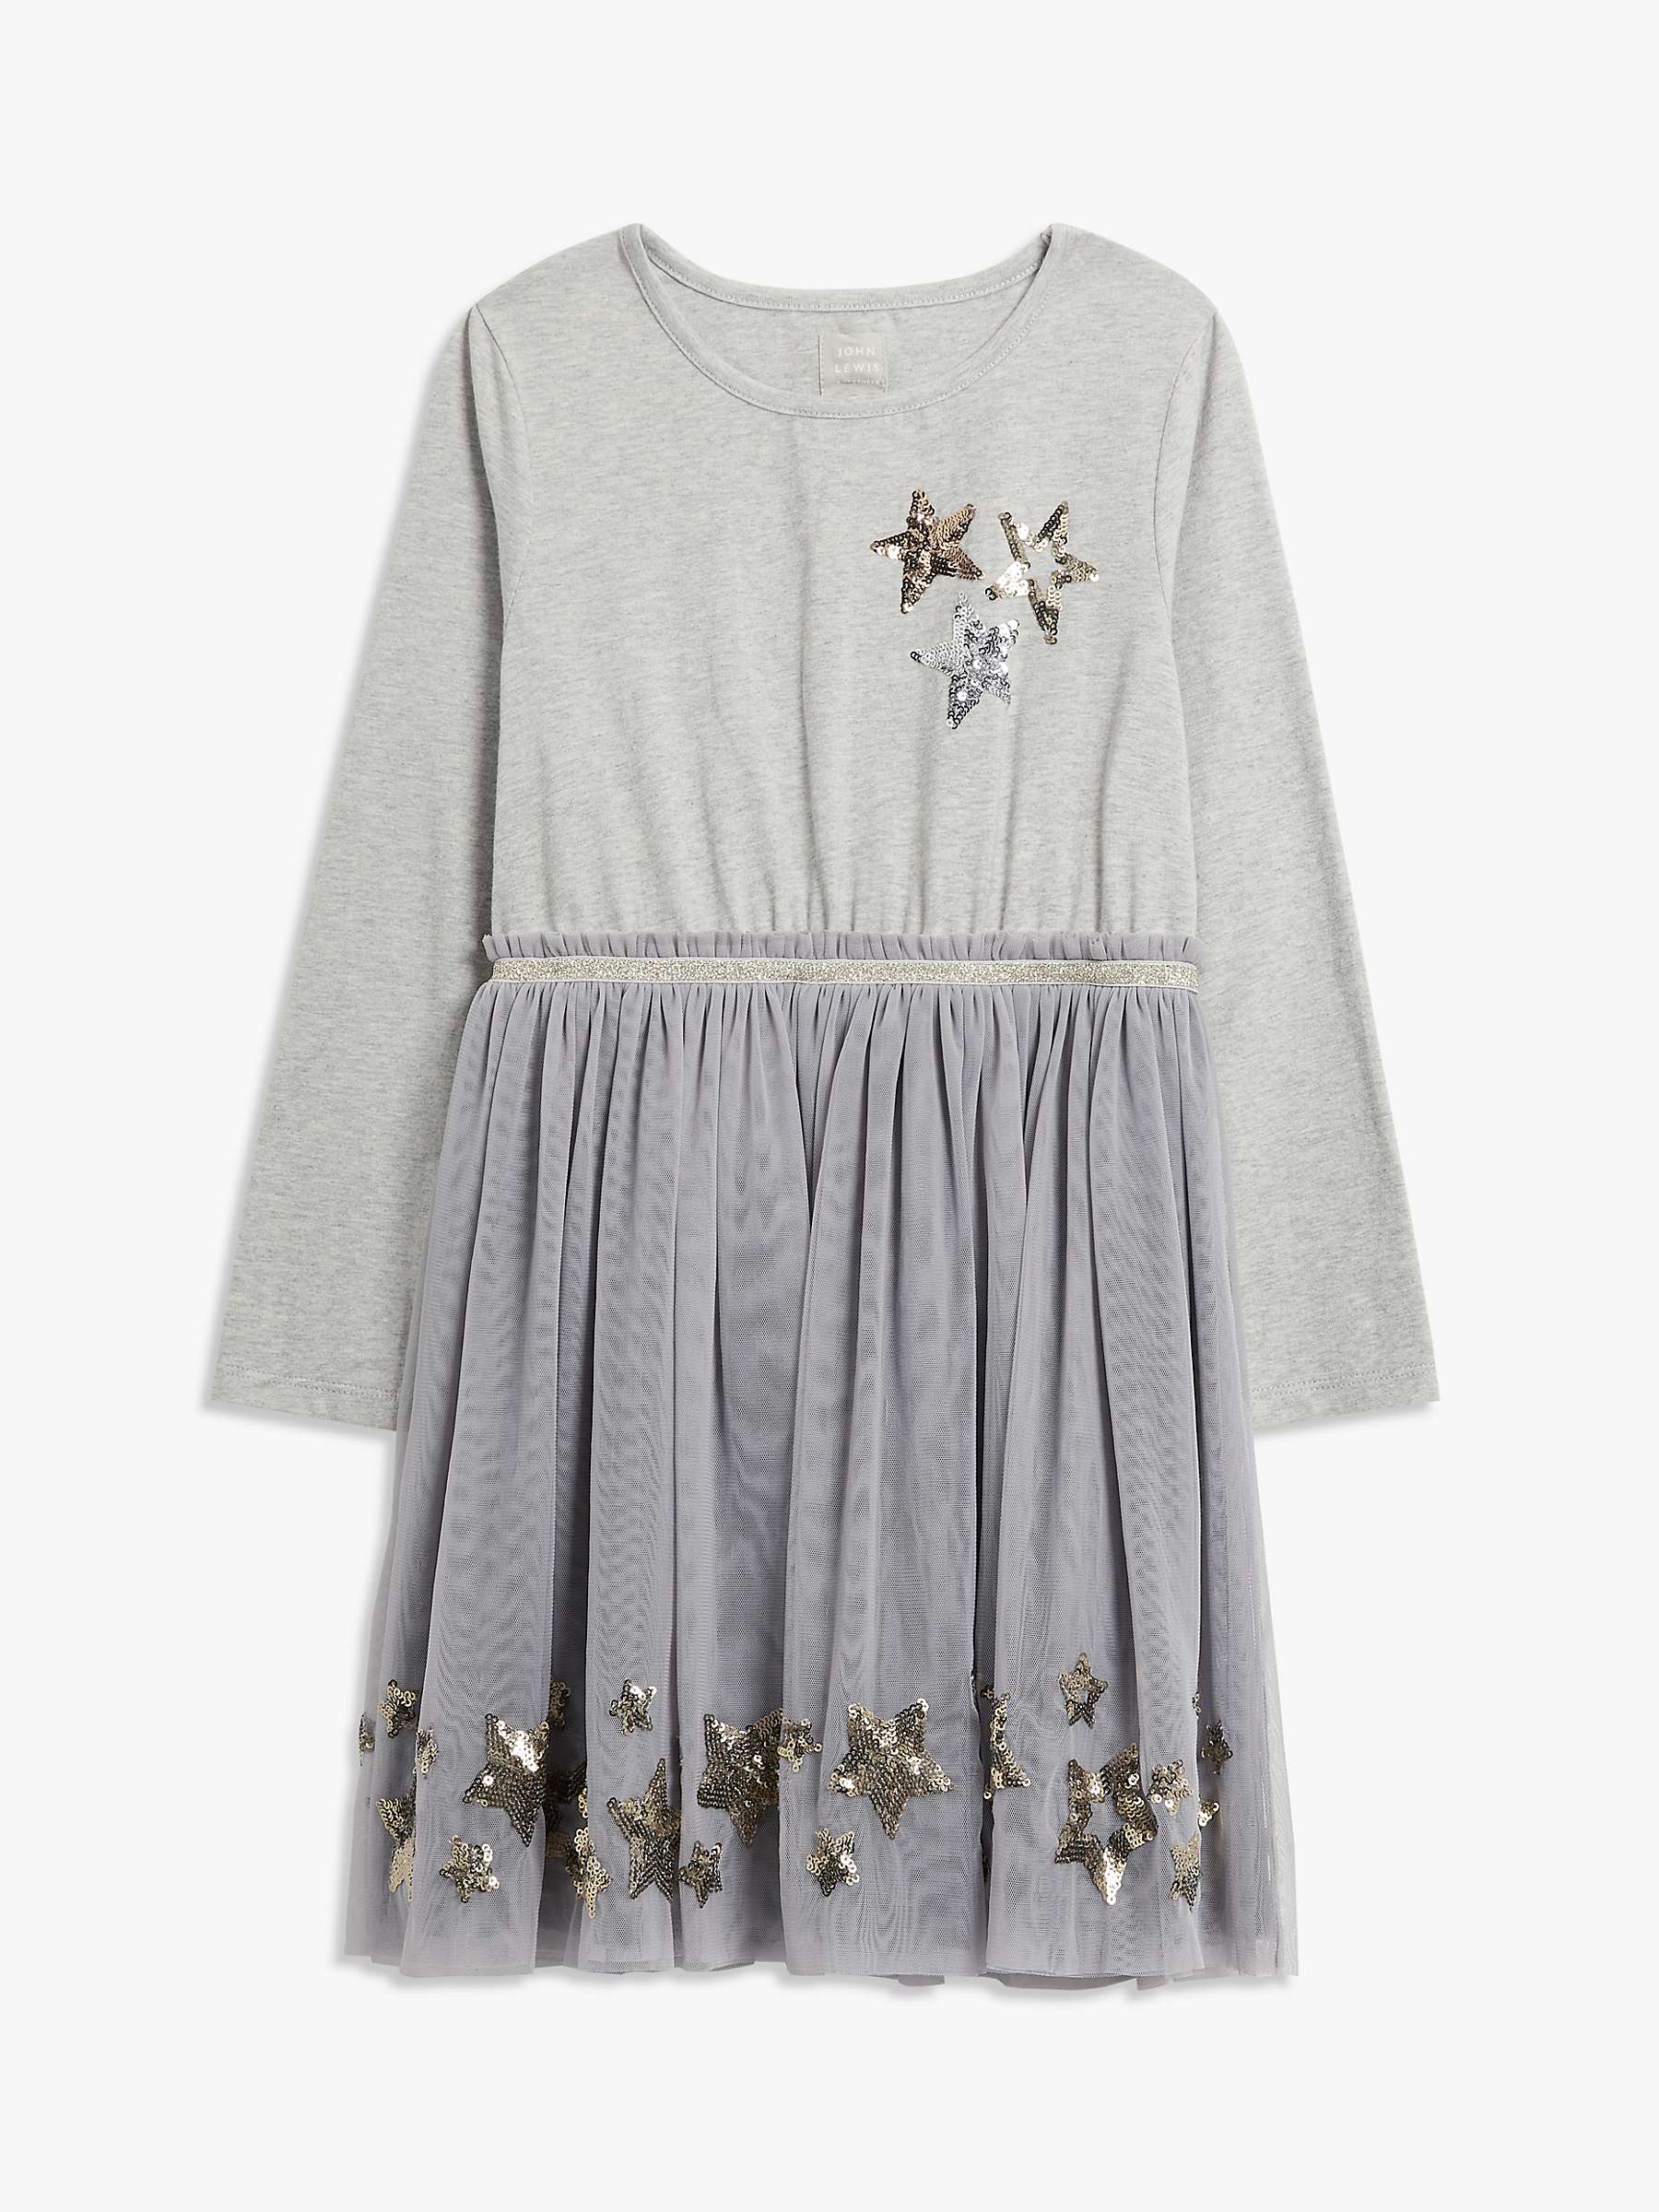 Buy John Lewis Kids' Sequin Star Jersey Top Tulle Skirt Dress Online at johnlewis.com